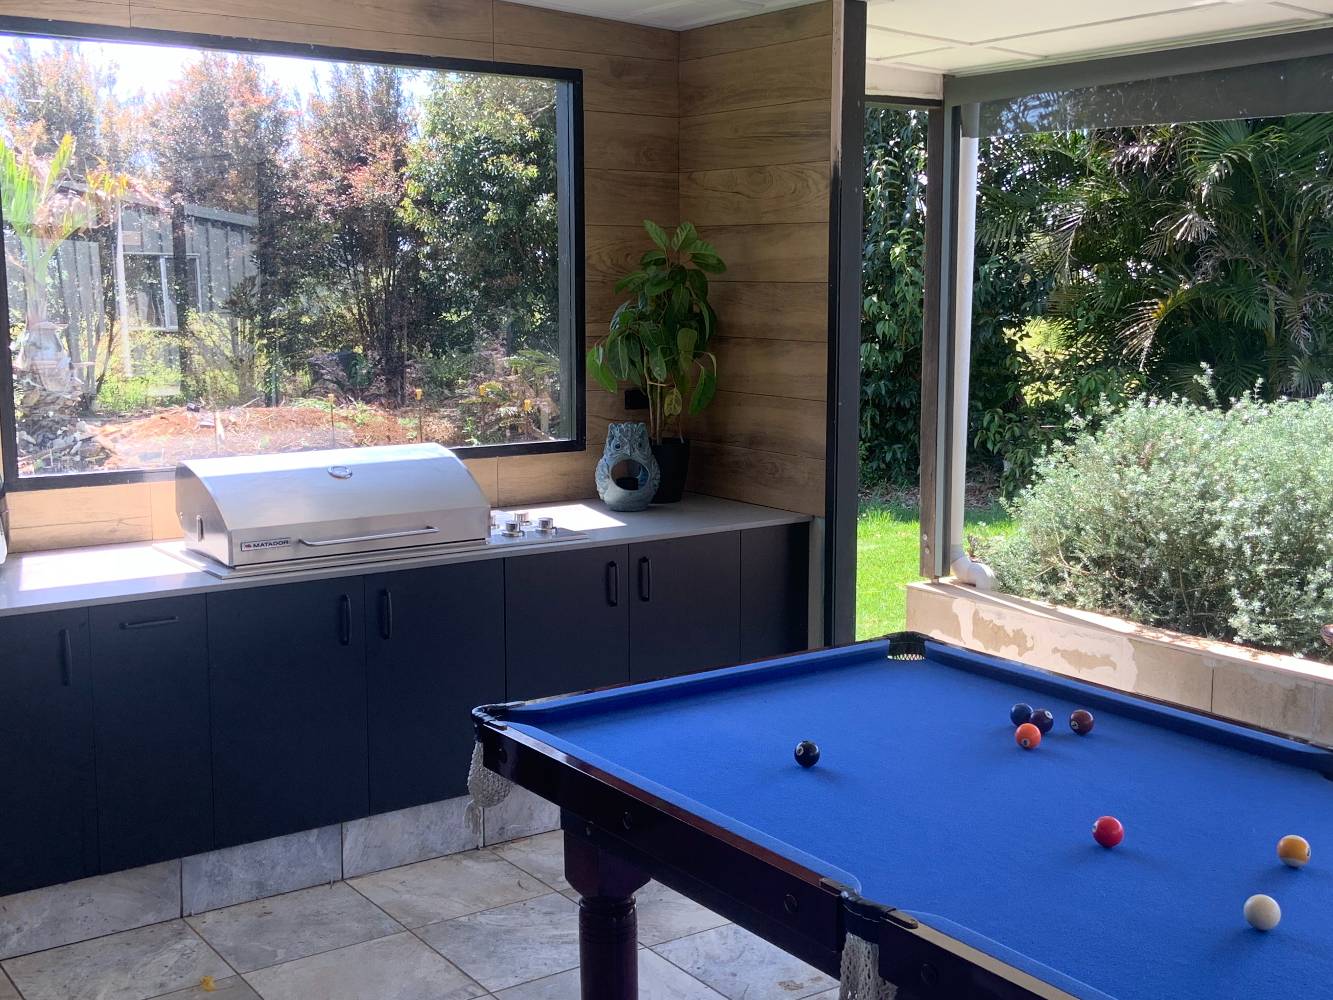 Alfresco BBQ & fridge with pool table